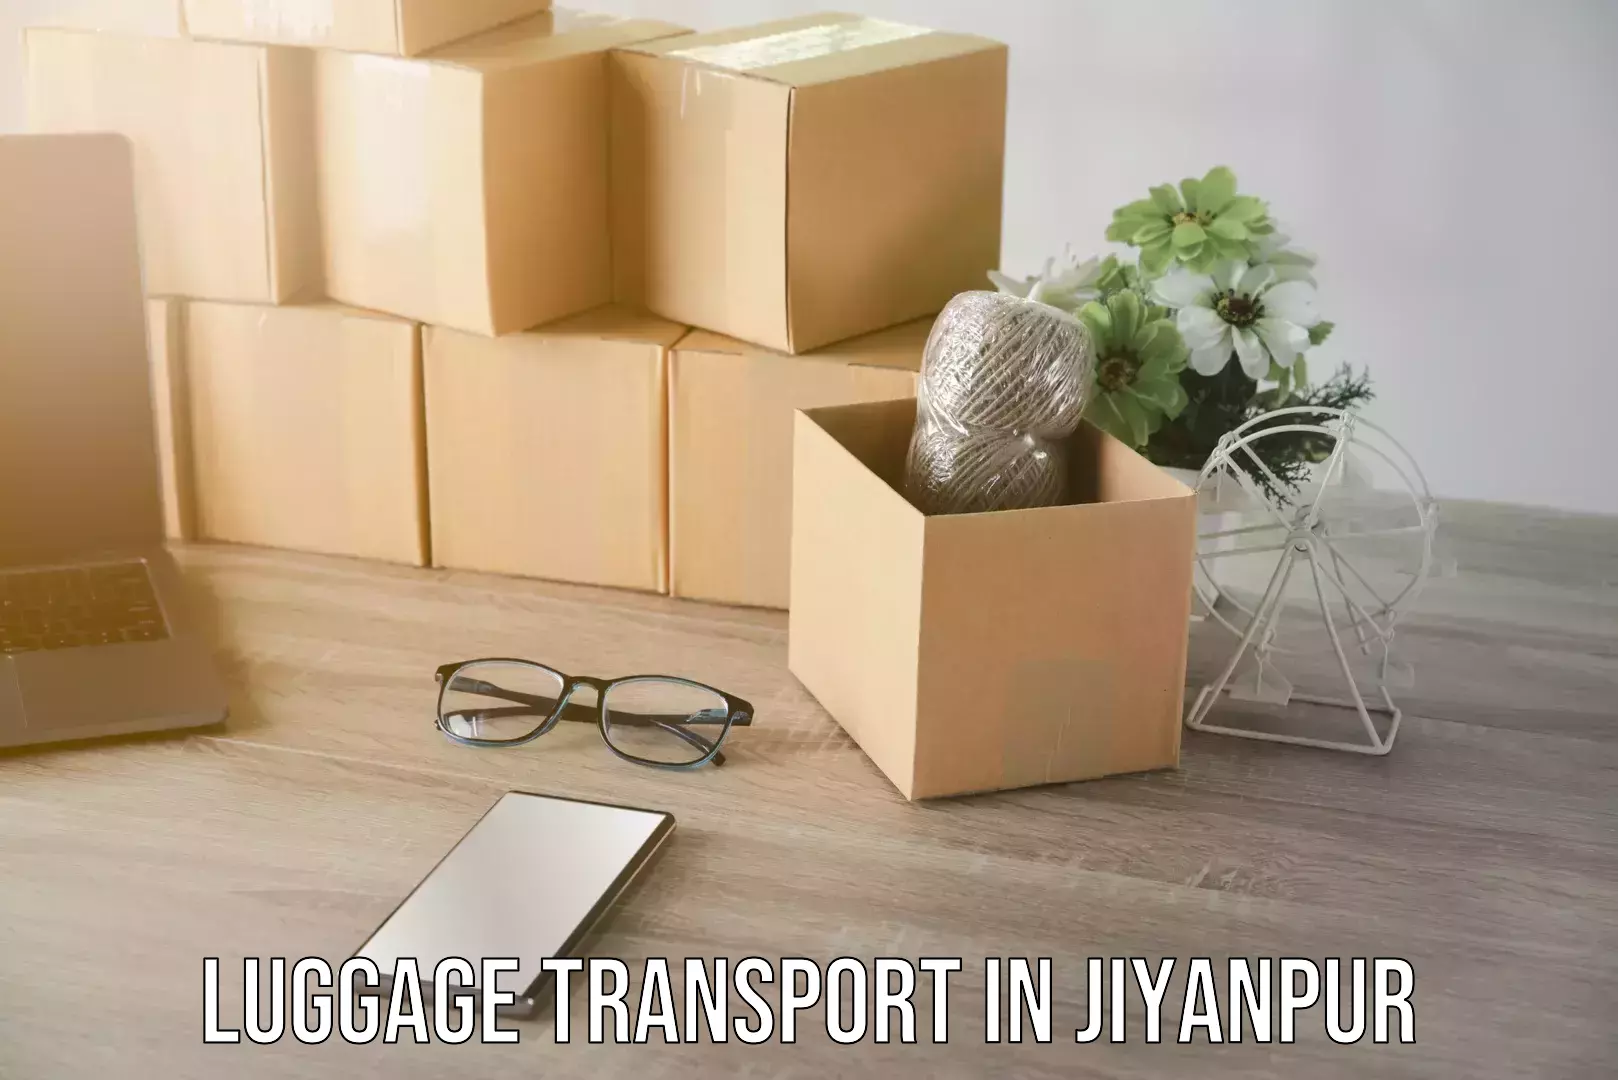 Luggage shipping rates in Jiyanpur